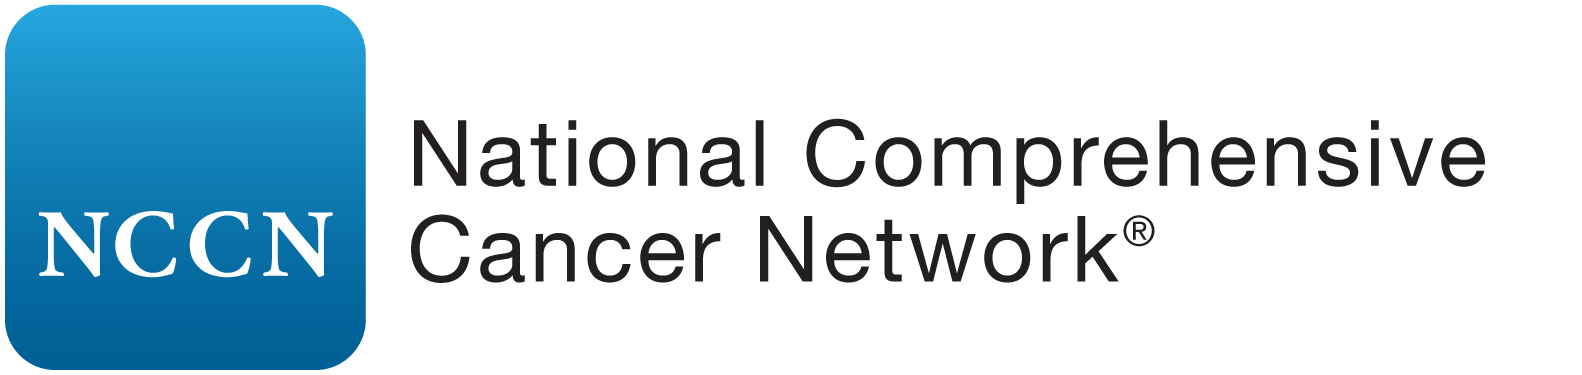 institutions-2018 NCCN Logo 2-Lines.jpg